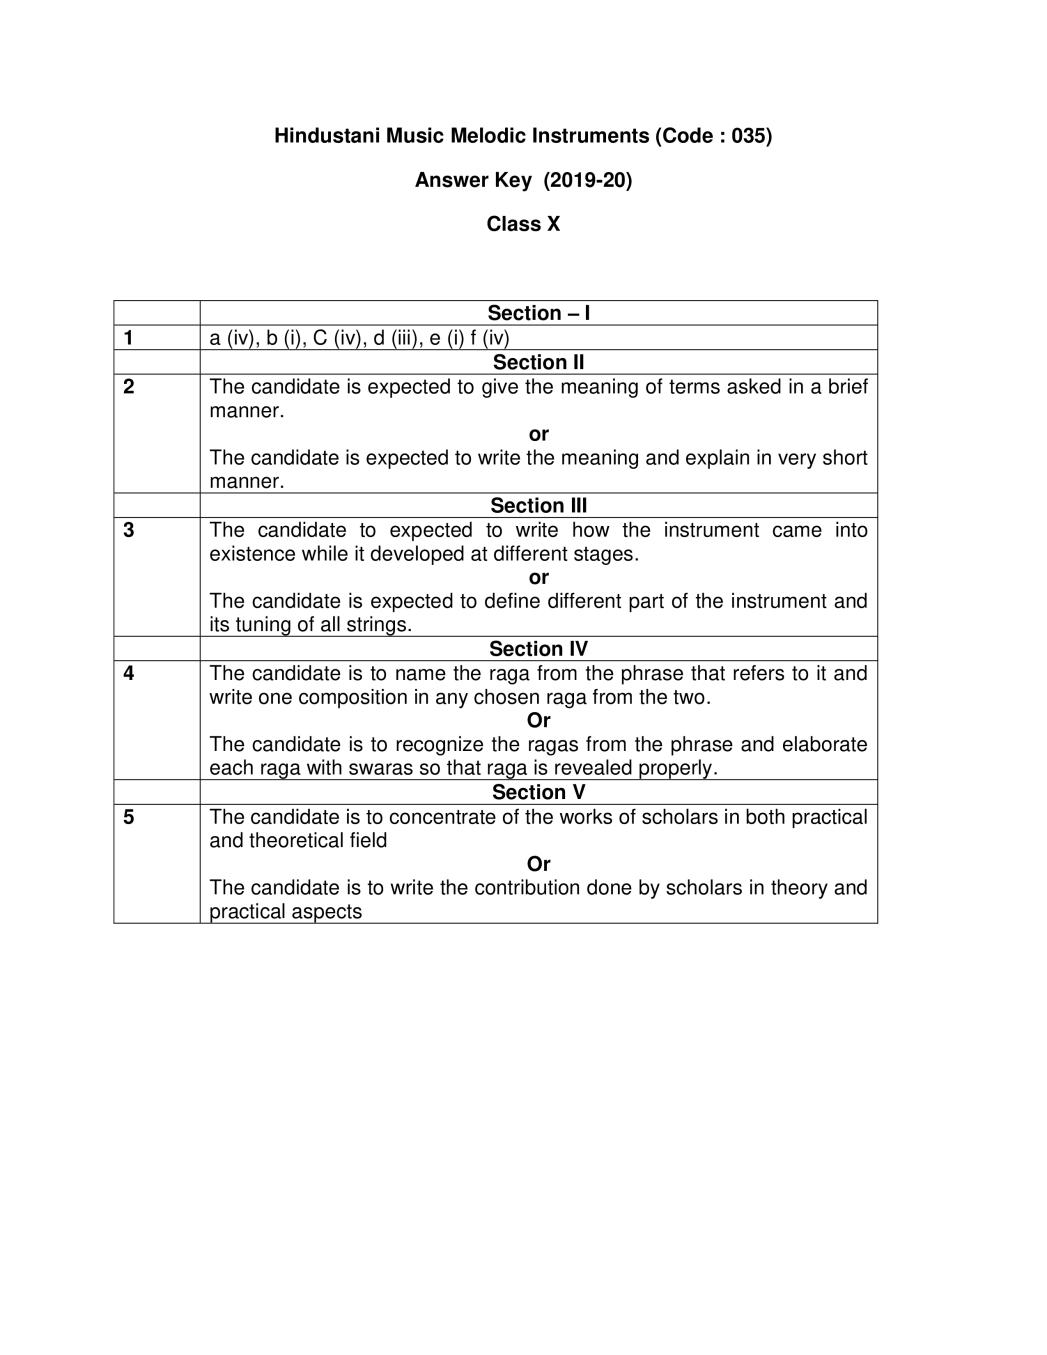 CBSE Class 10 Marking Scheme 2020 for Hindustandi Melodic Instrument - Page 1